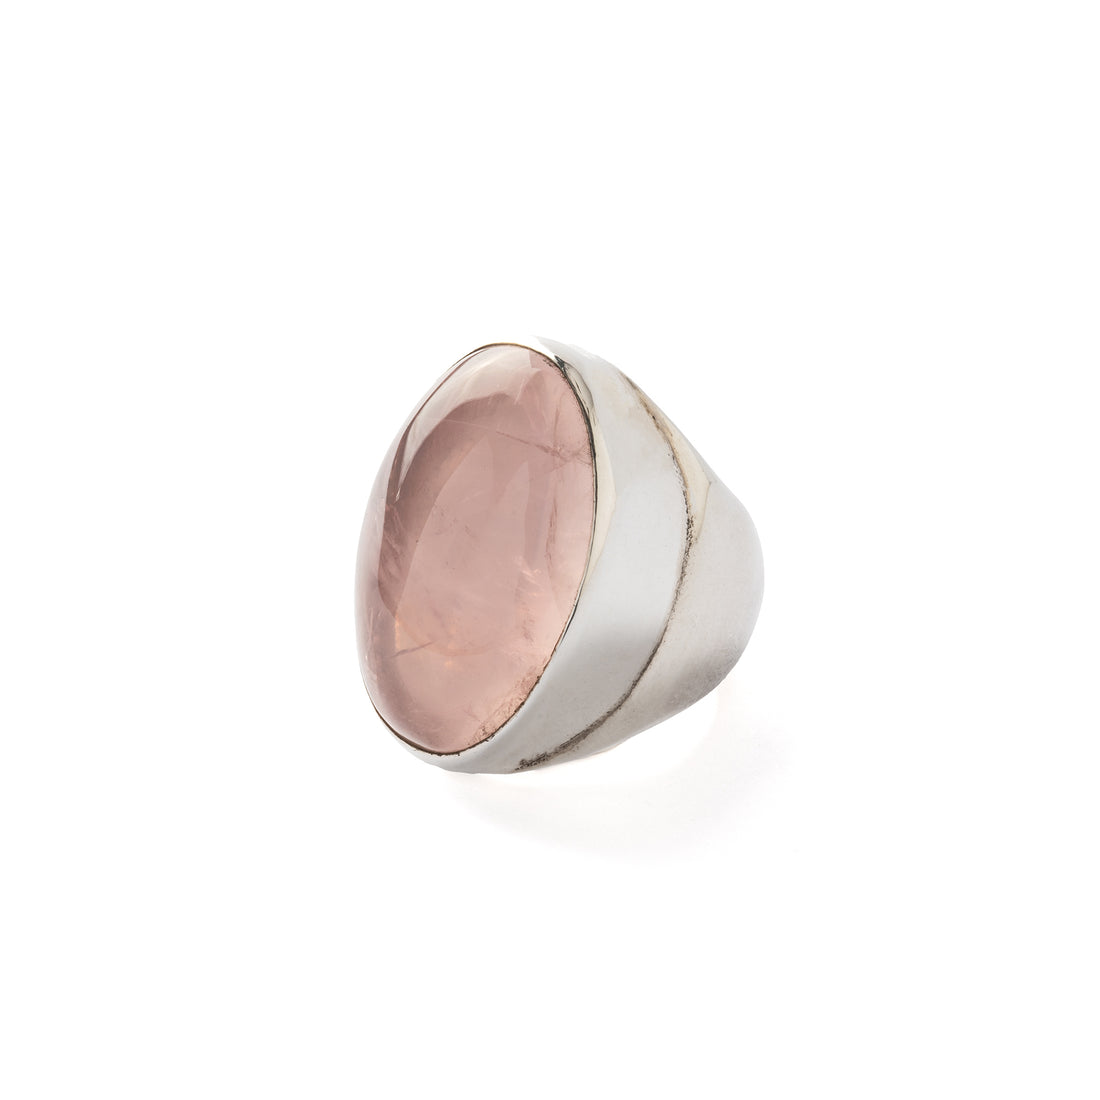 Hallmarked Silver Ring with Rose Quartz